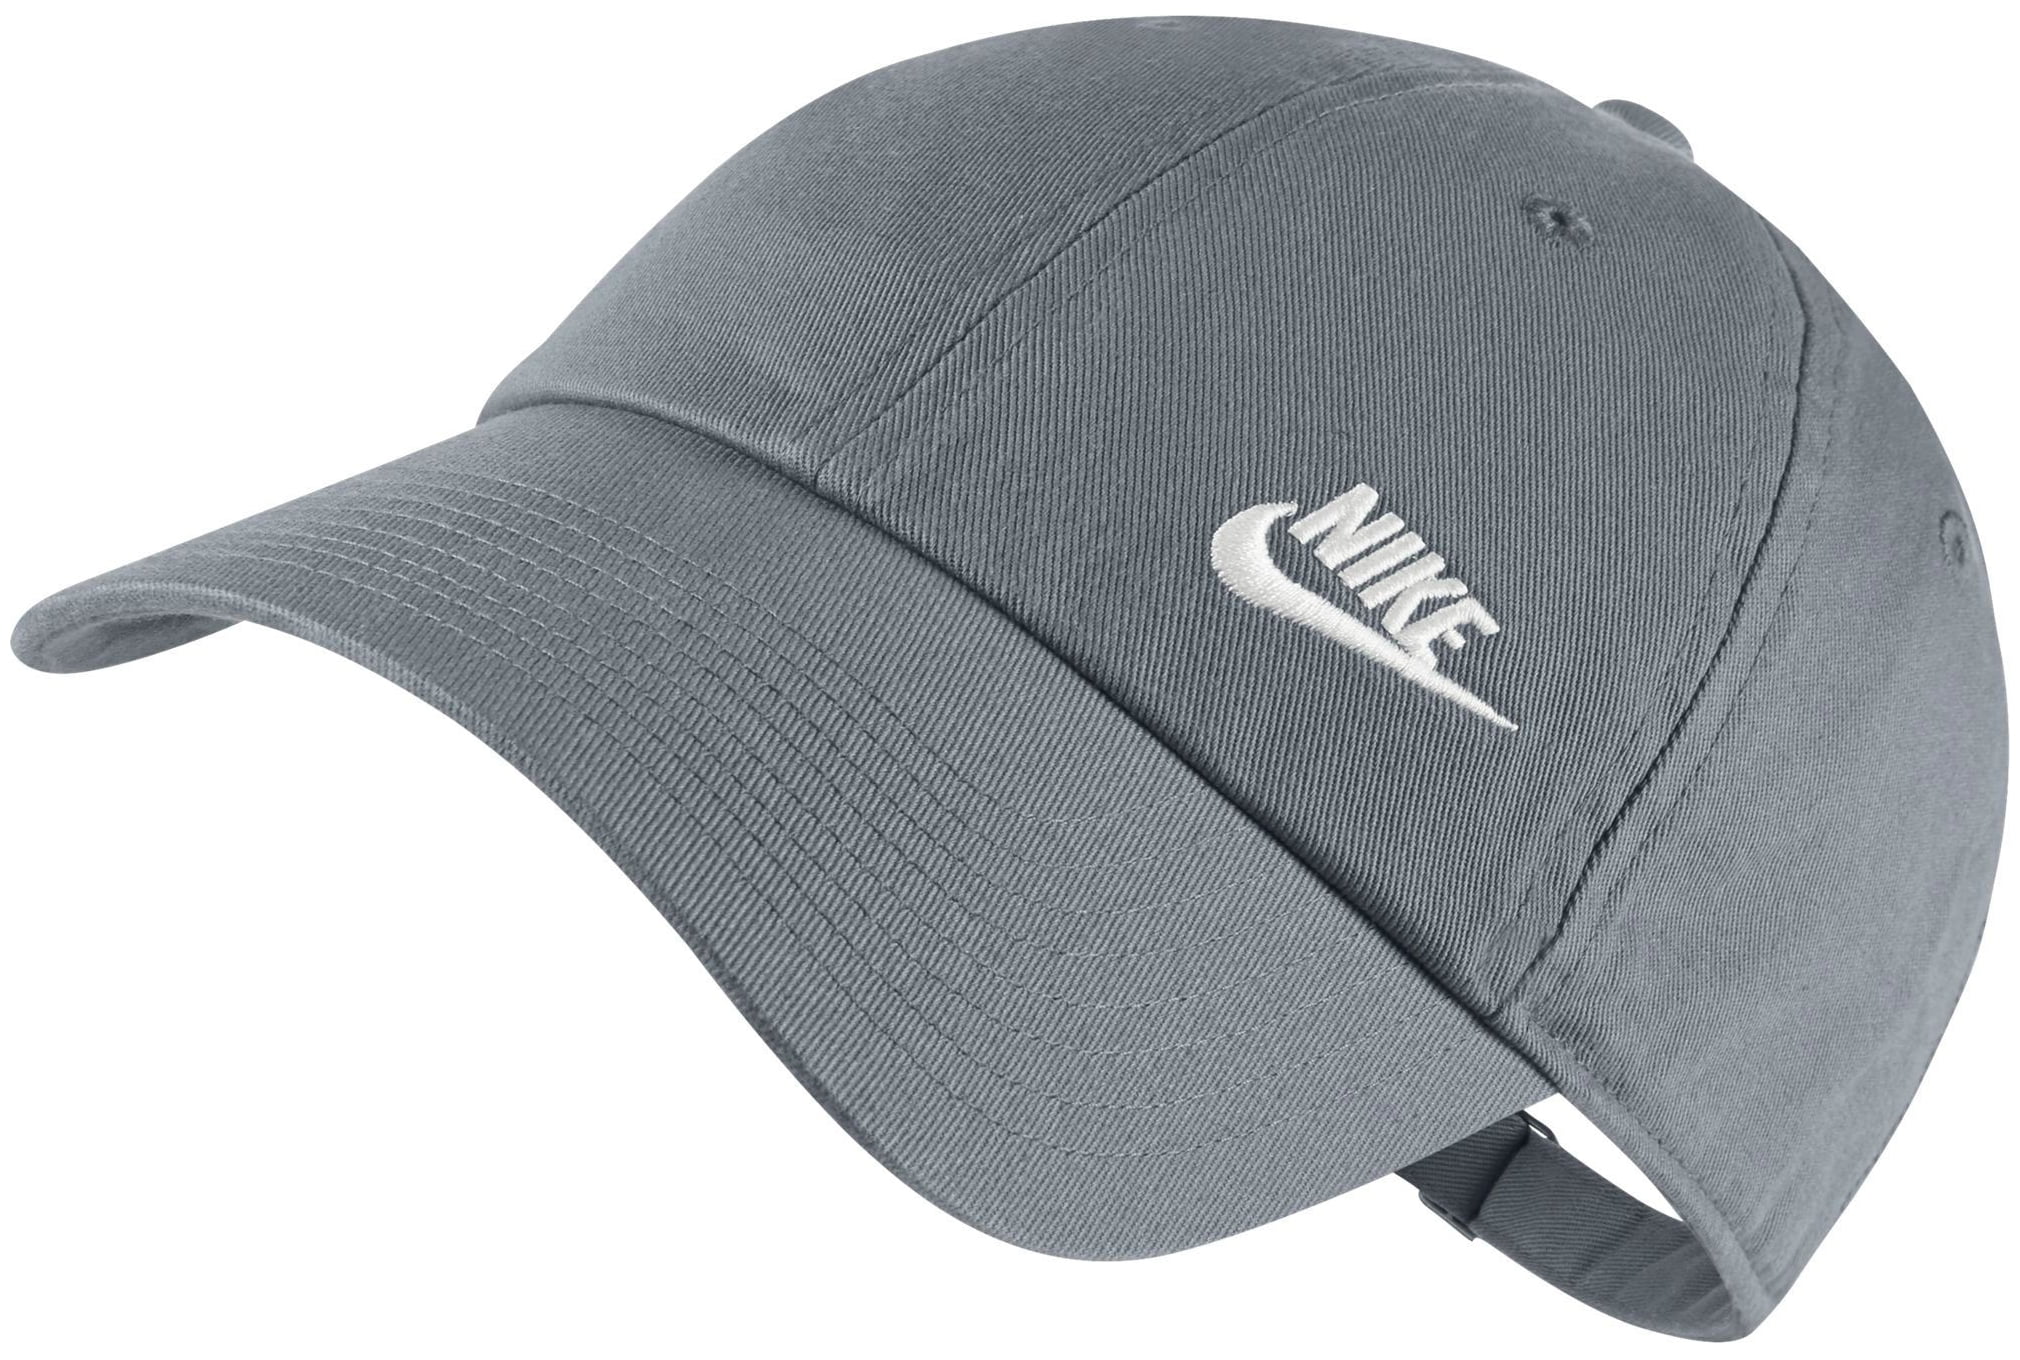 nike women's twill h86 adjustable hat